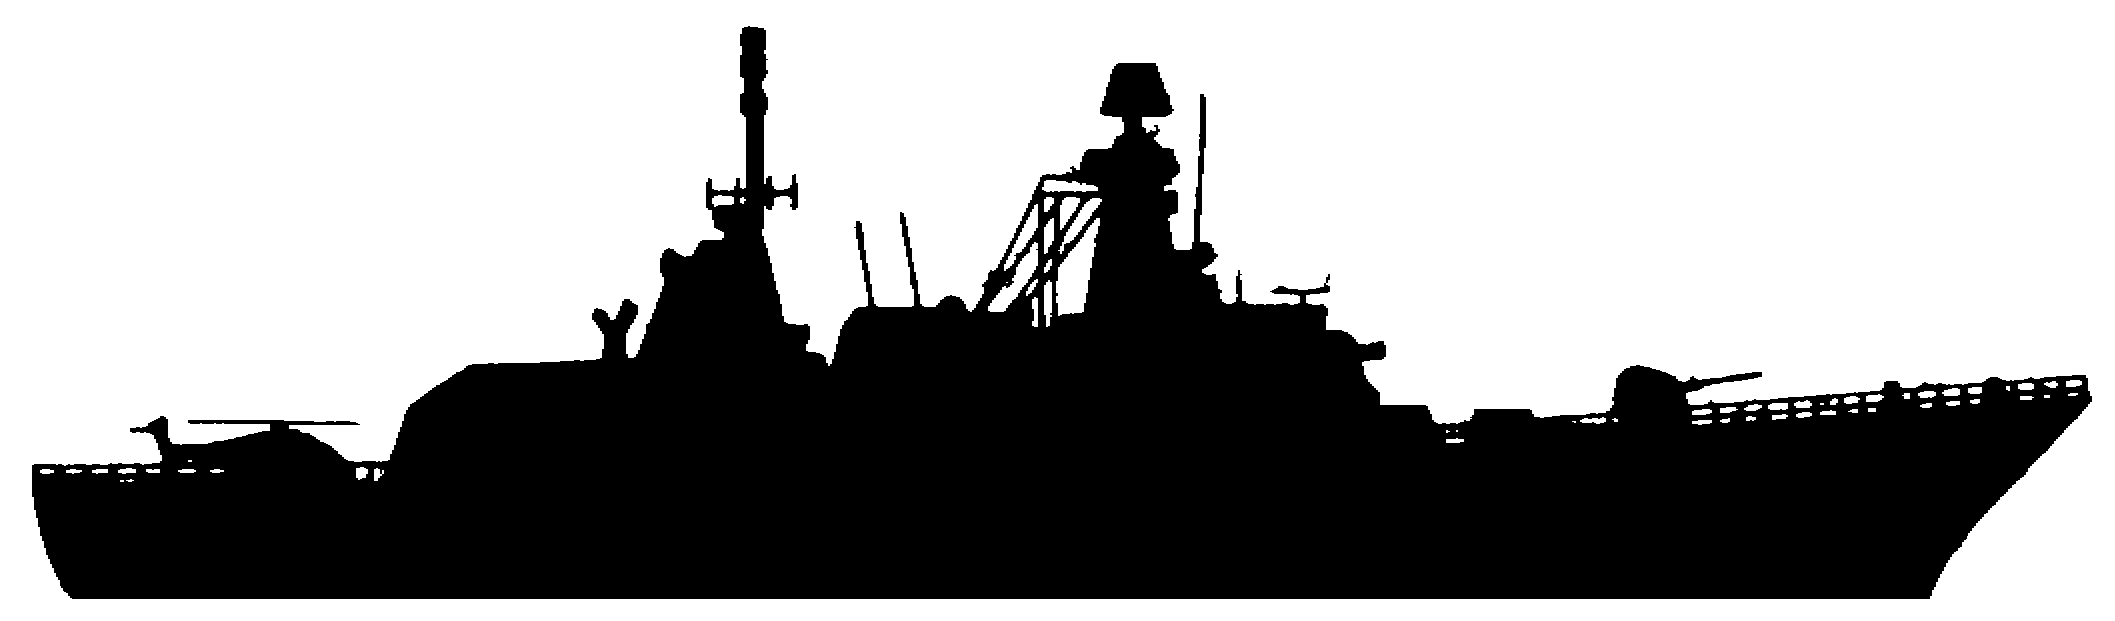 Navy ship silhouette clip art